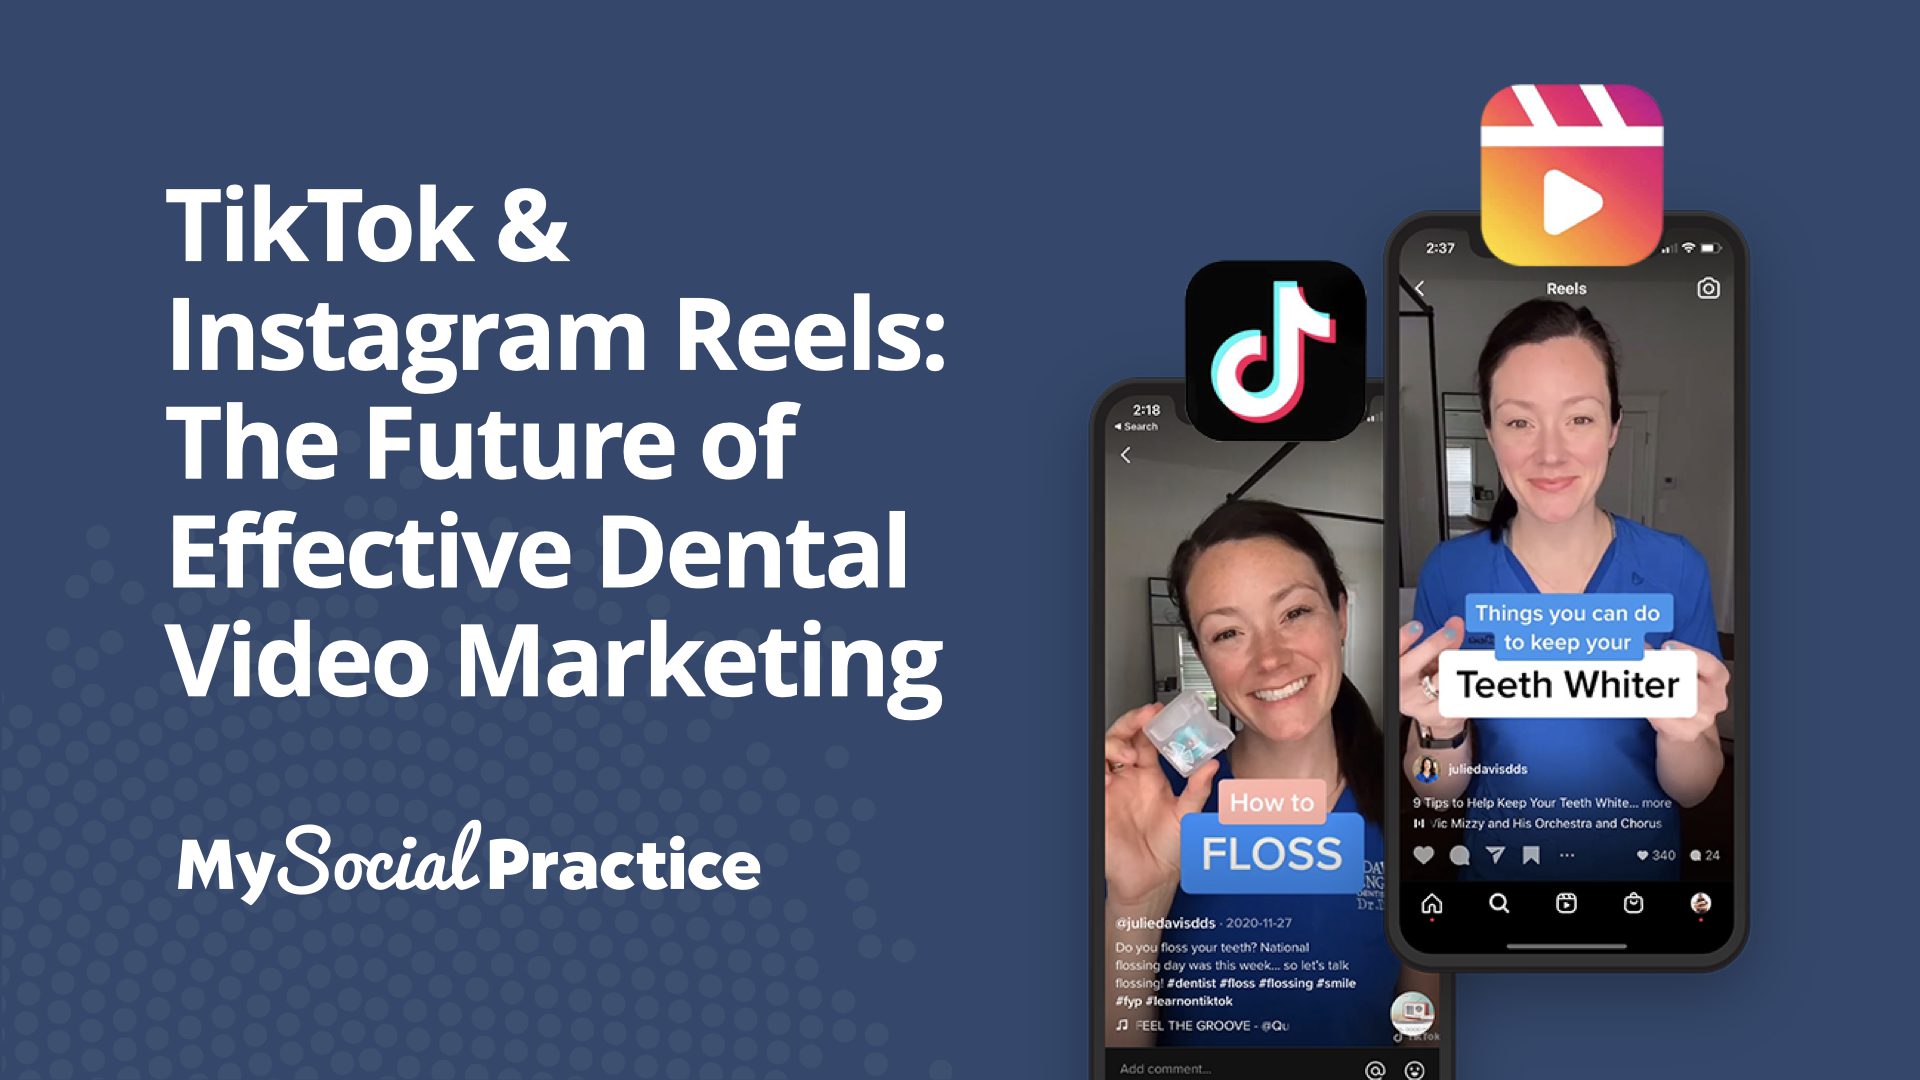 My Social Practice - Social Media Marketing for Dental & Dental Specialty Practices - instagram reels for dental practices